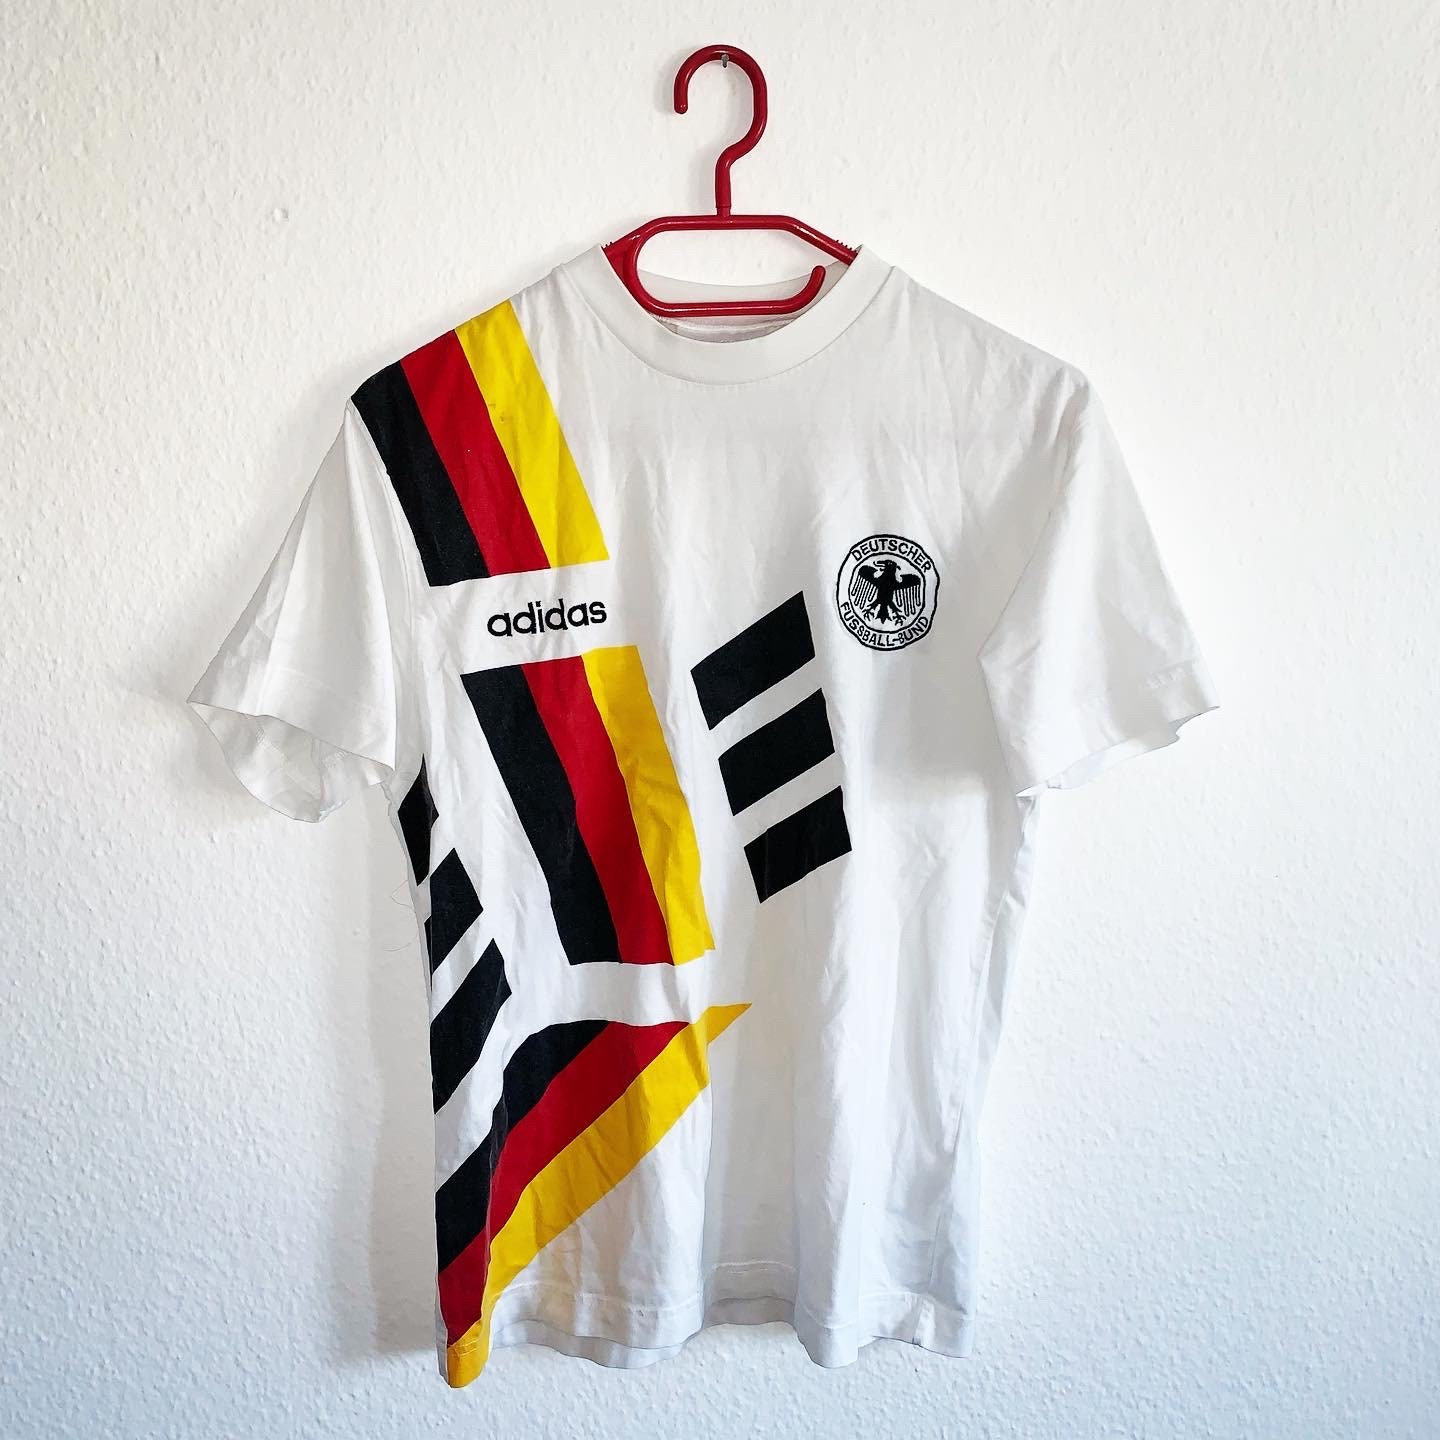 SIZE 34 XS Vintage Adidas DFB Shirt T-shirt Germany 1990 Etsy